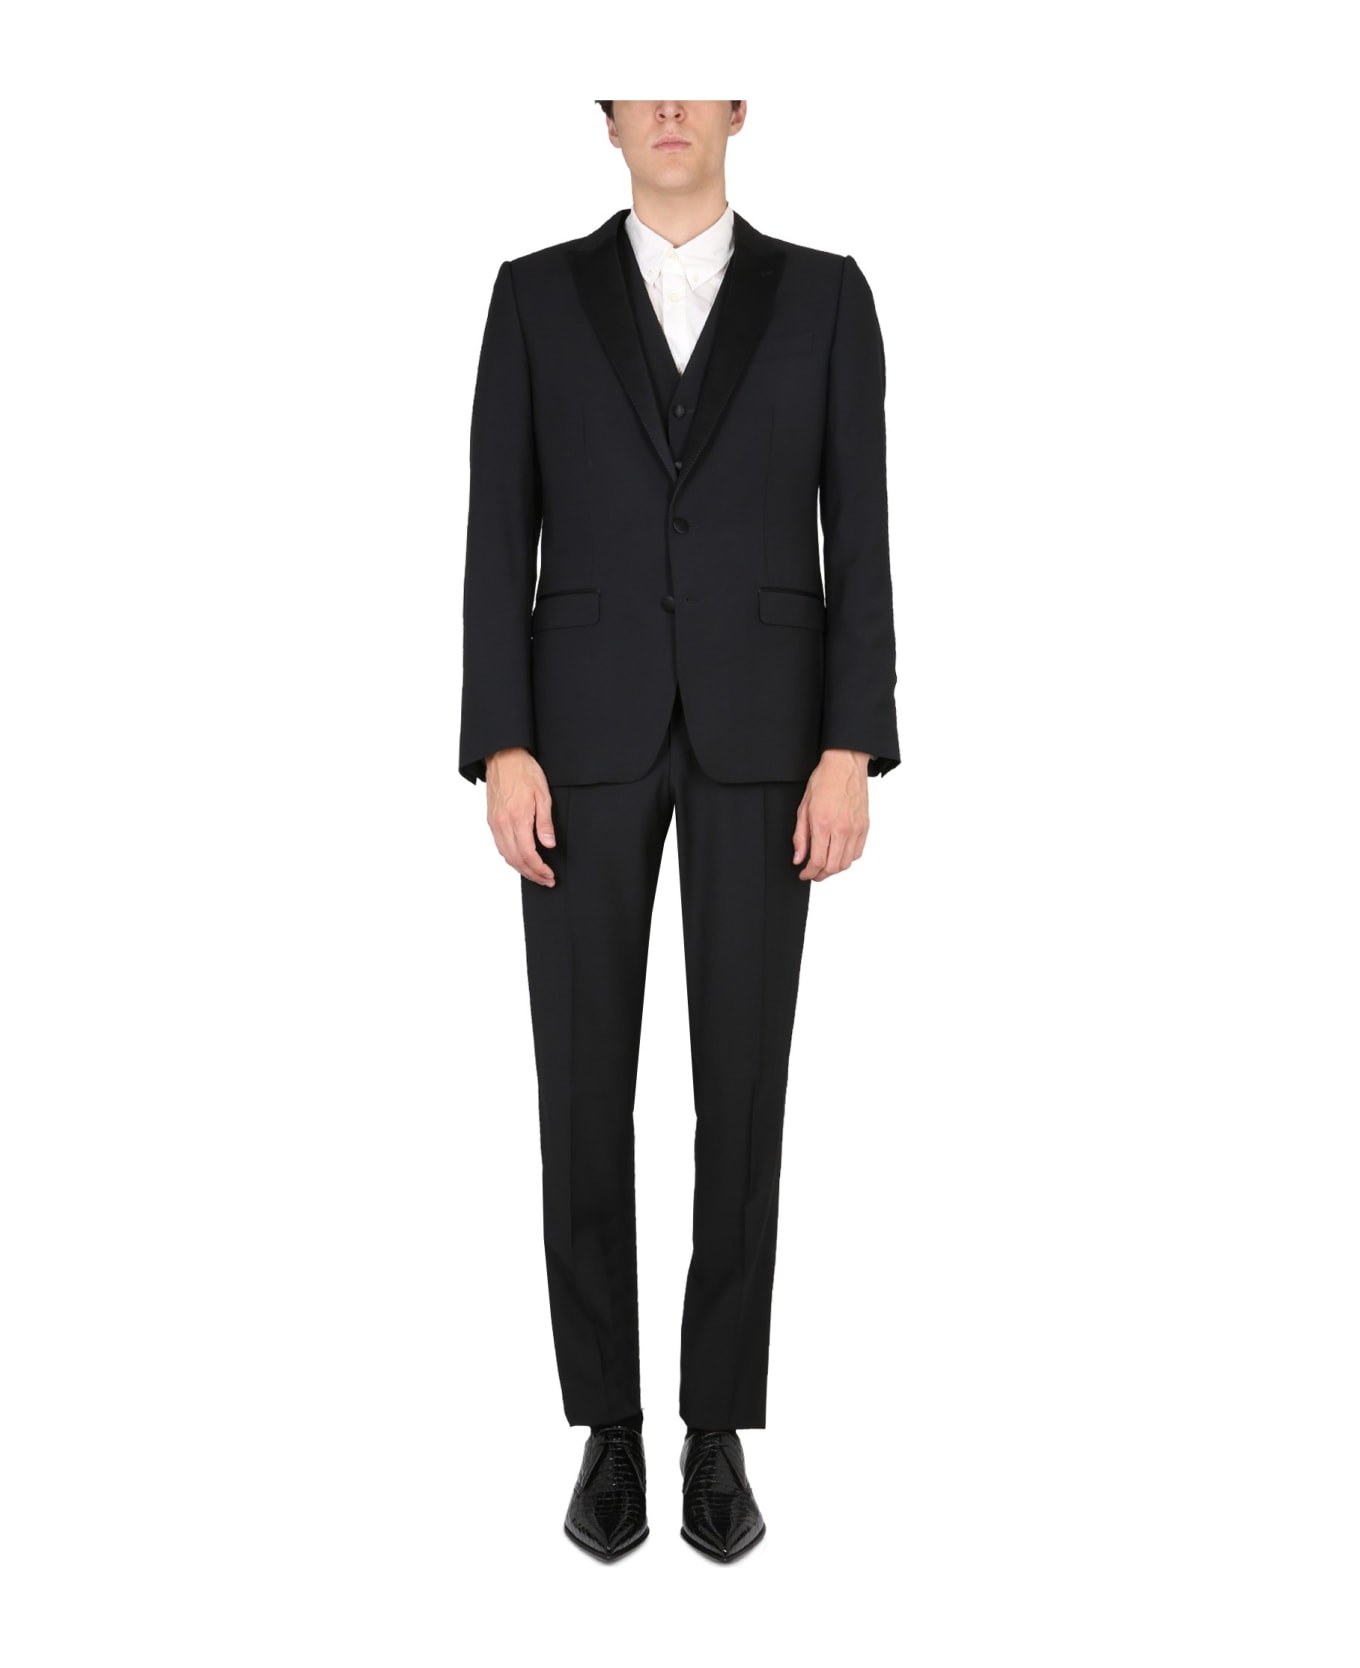 Dolce Seul & Gabbana Martini Tuxedo Suit - NERO